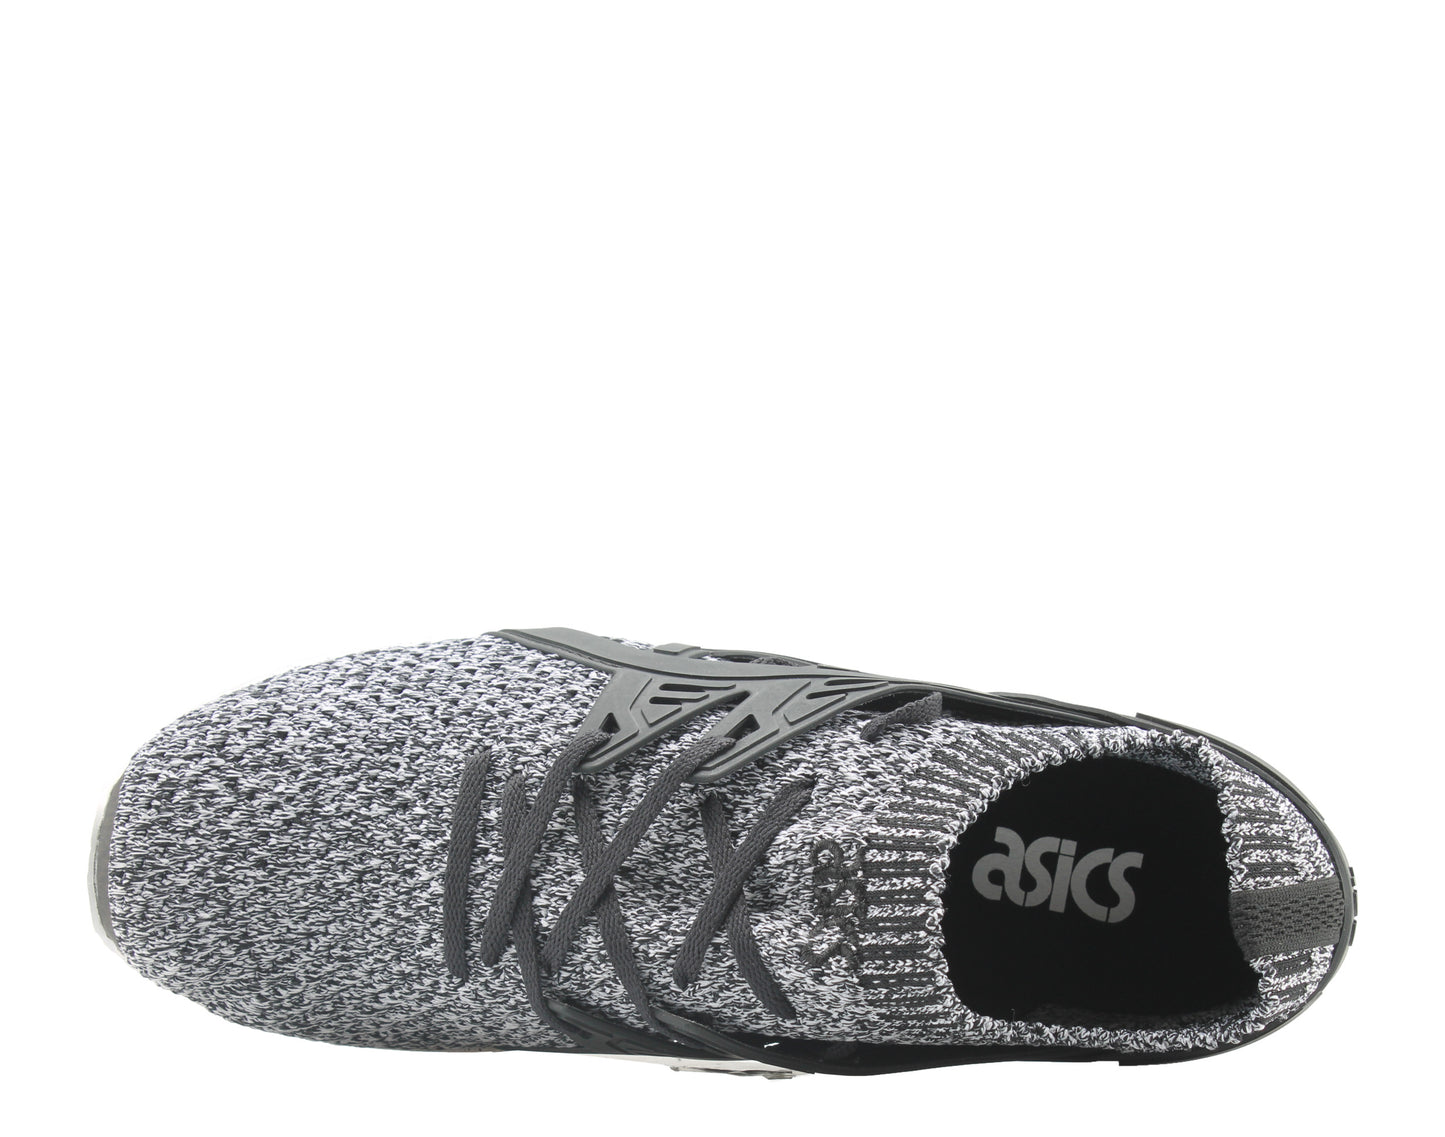 Asics Gel-Kayano Trainer Knit Men's Running Shoes